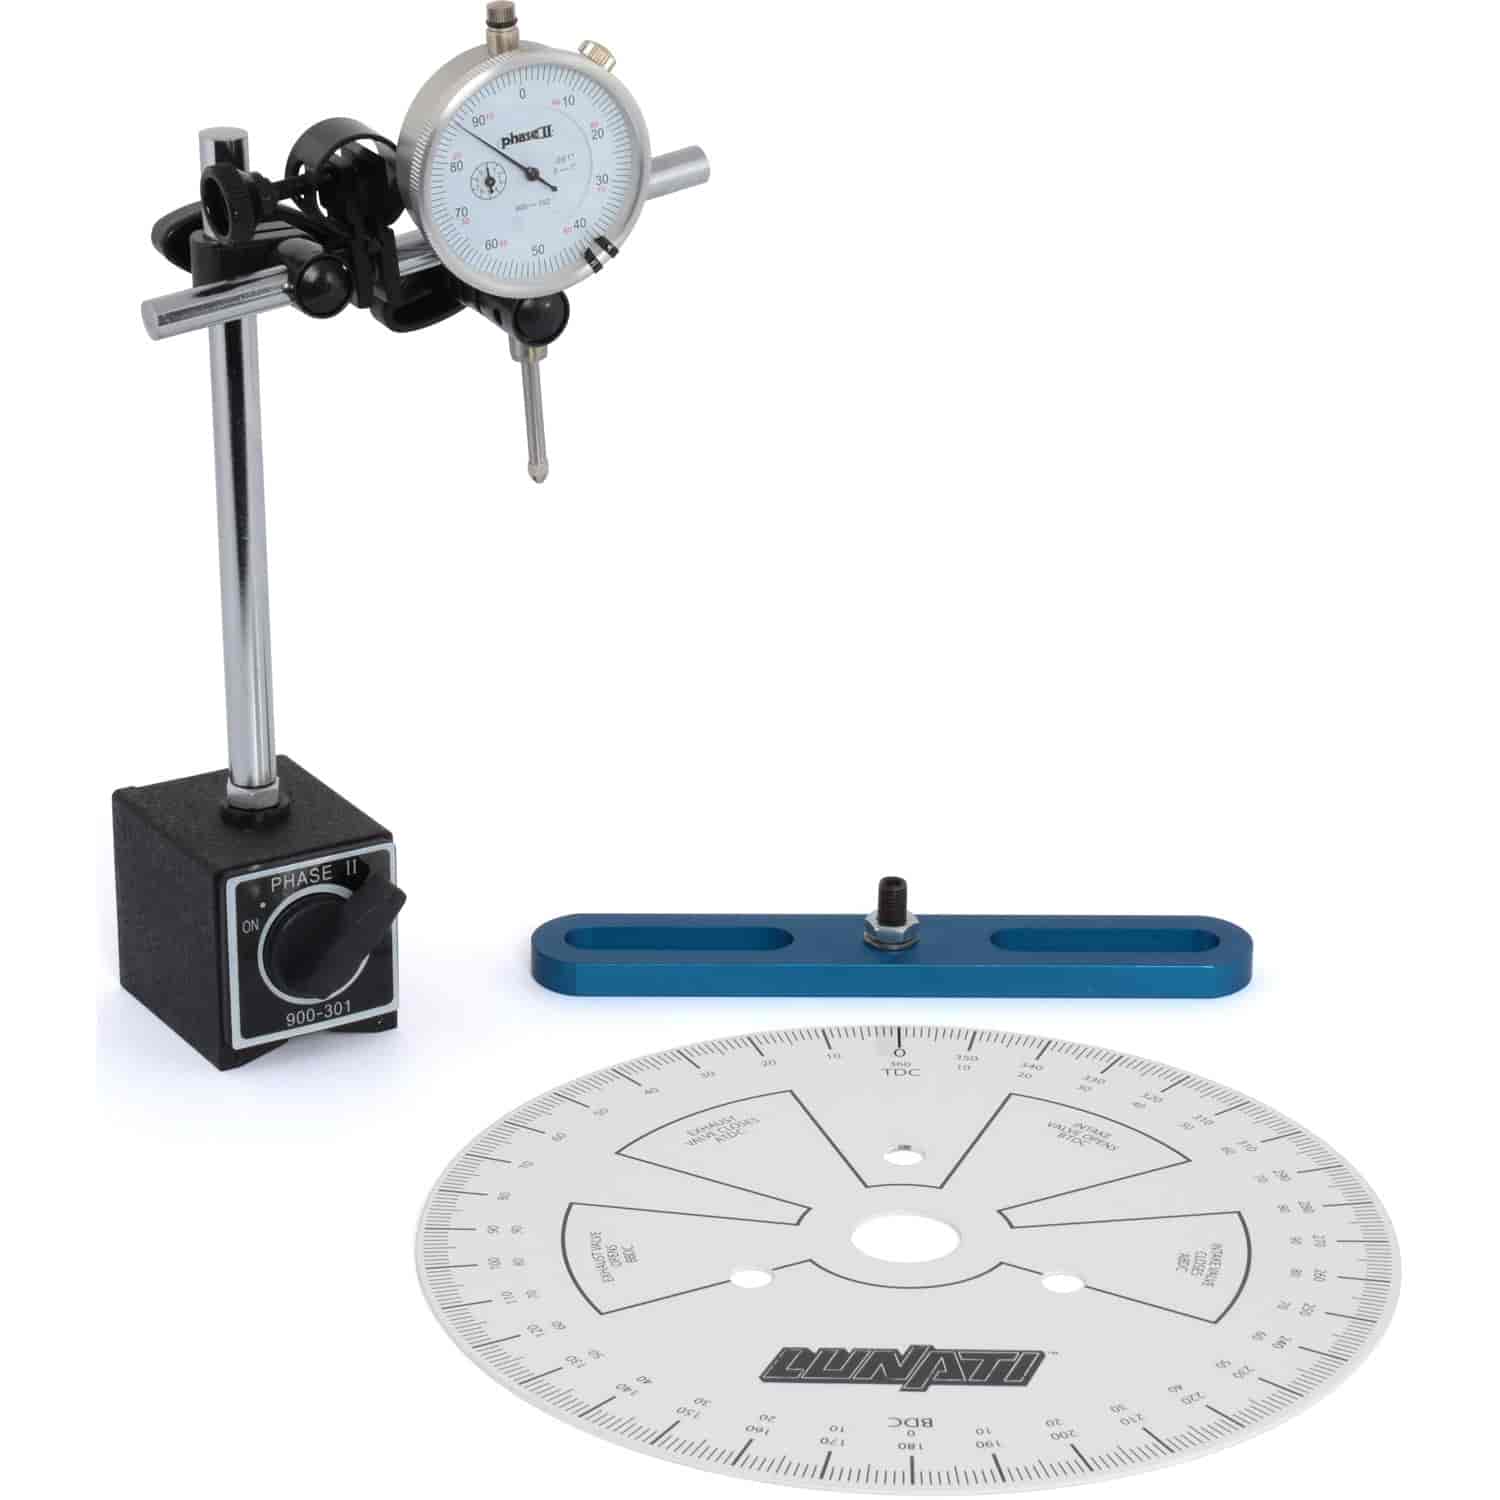 Cam Degree Wheel Kit Kit Includes: Dial Indicator